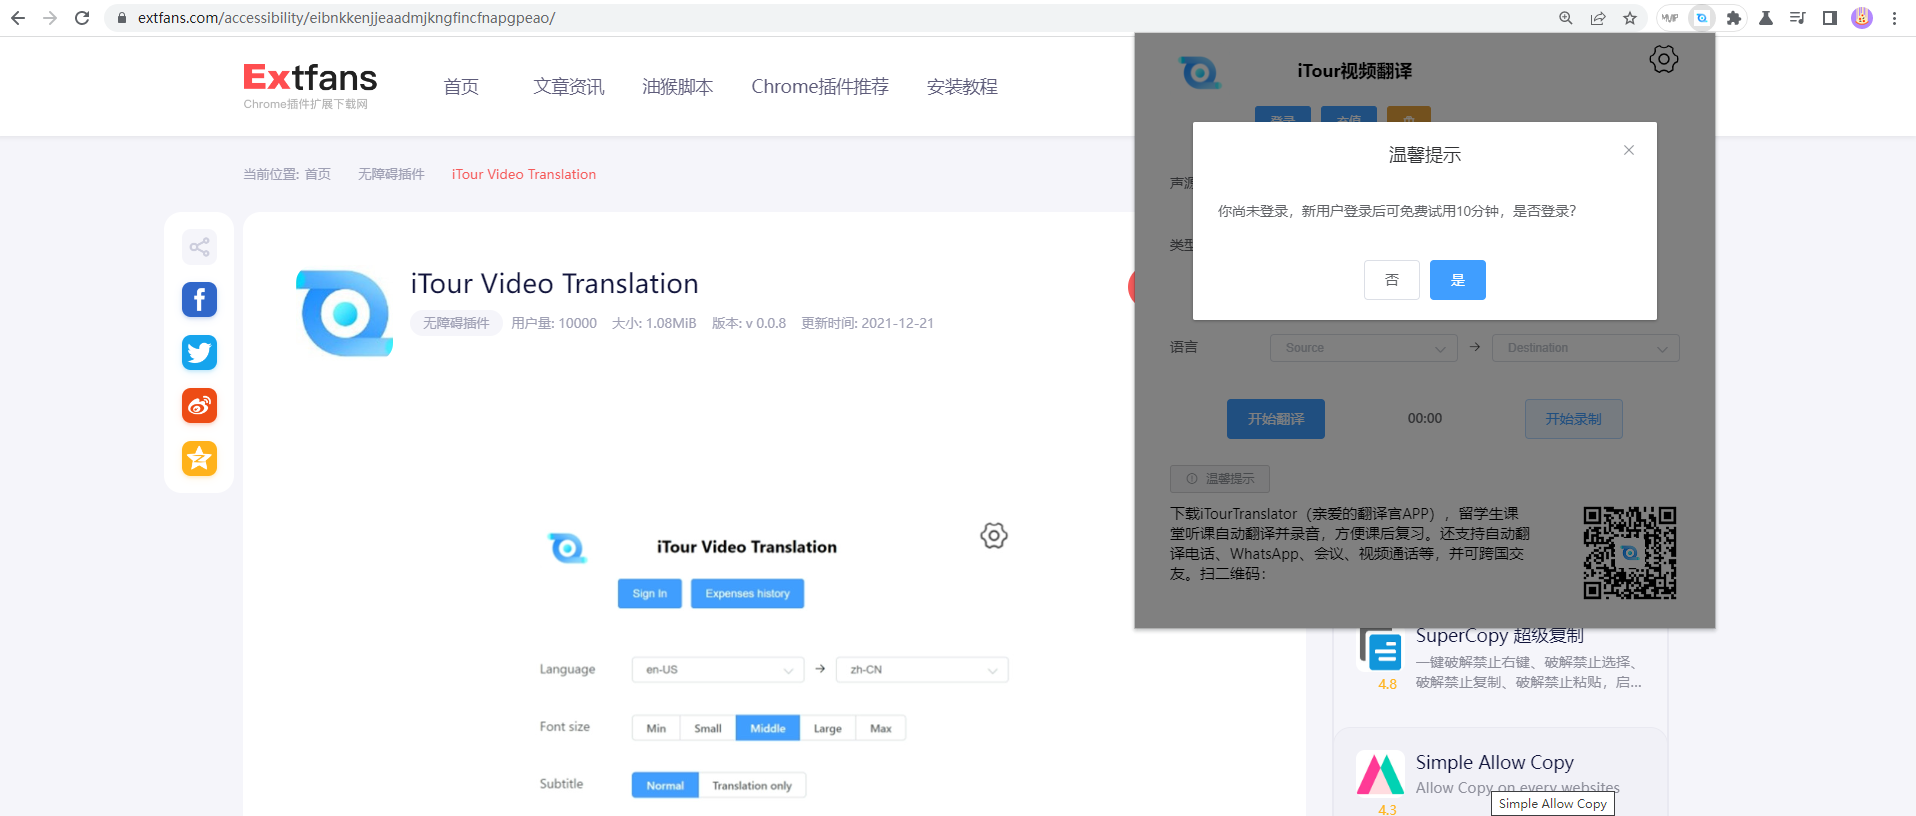 iTour Video Translation 插件使用教程